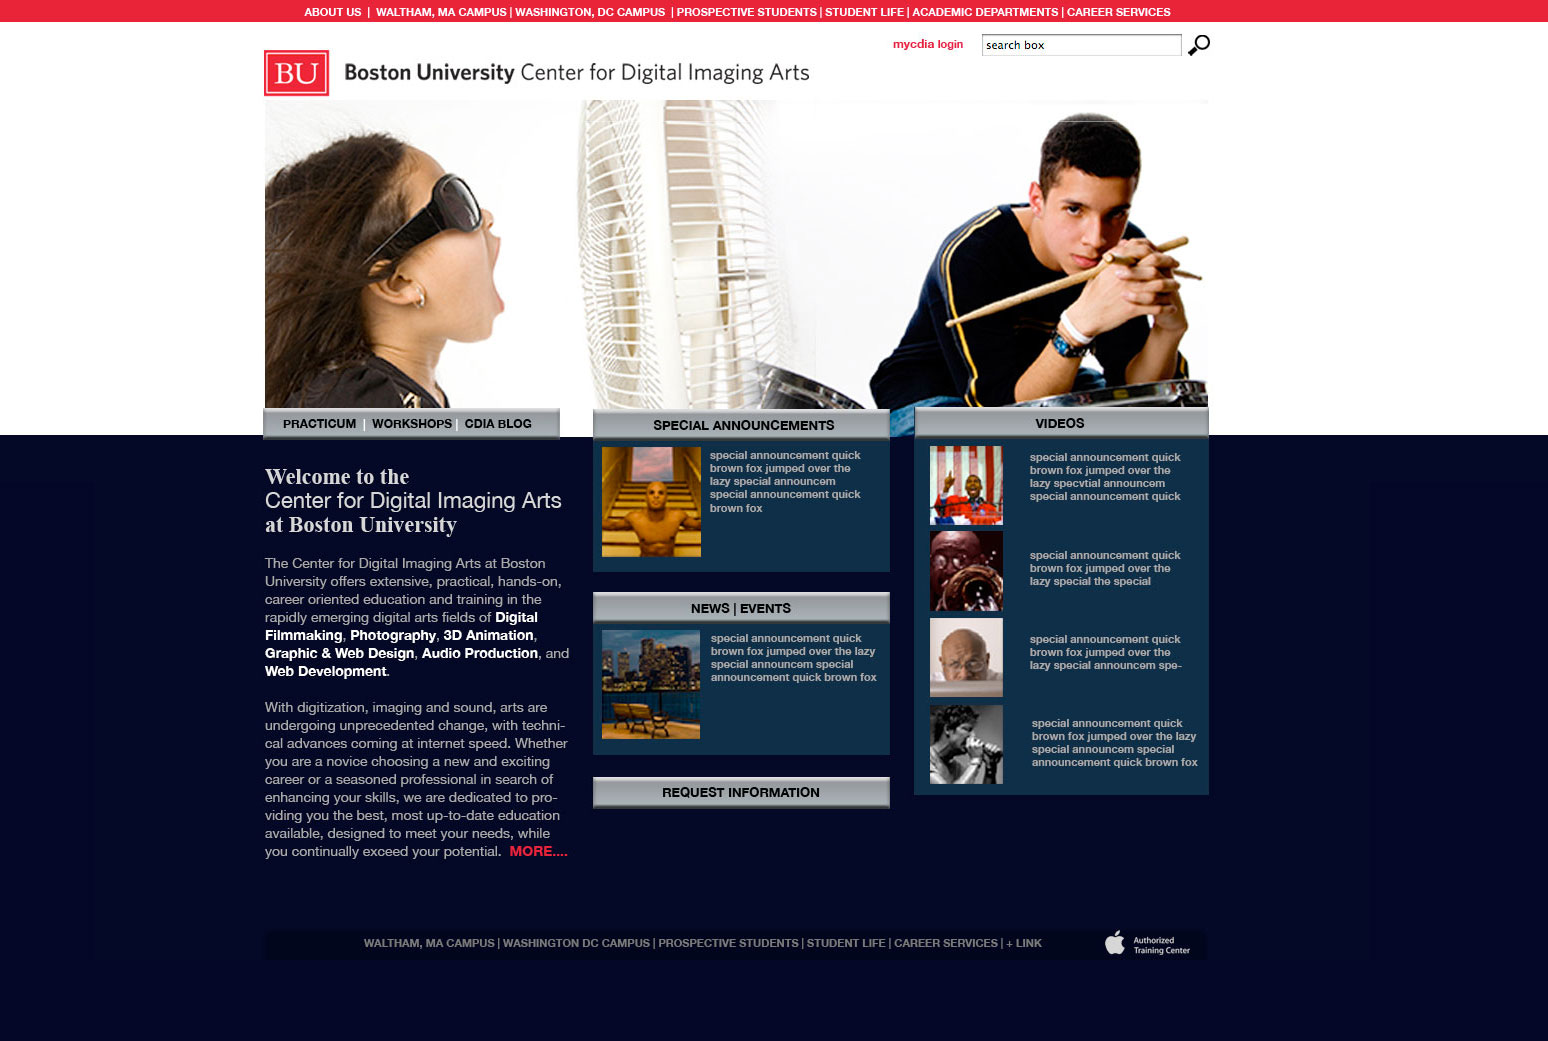 Boston University Center for Digital Imaging Arts web design design 1 image